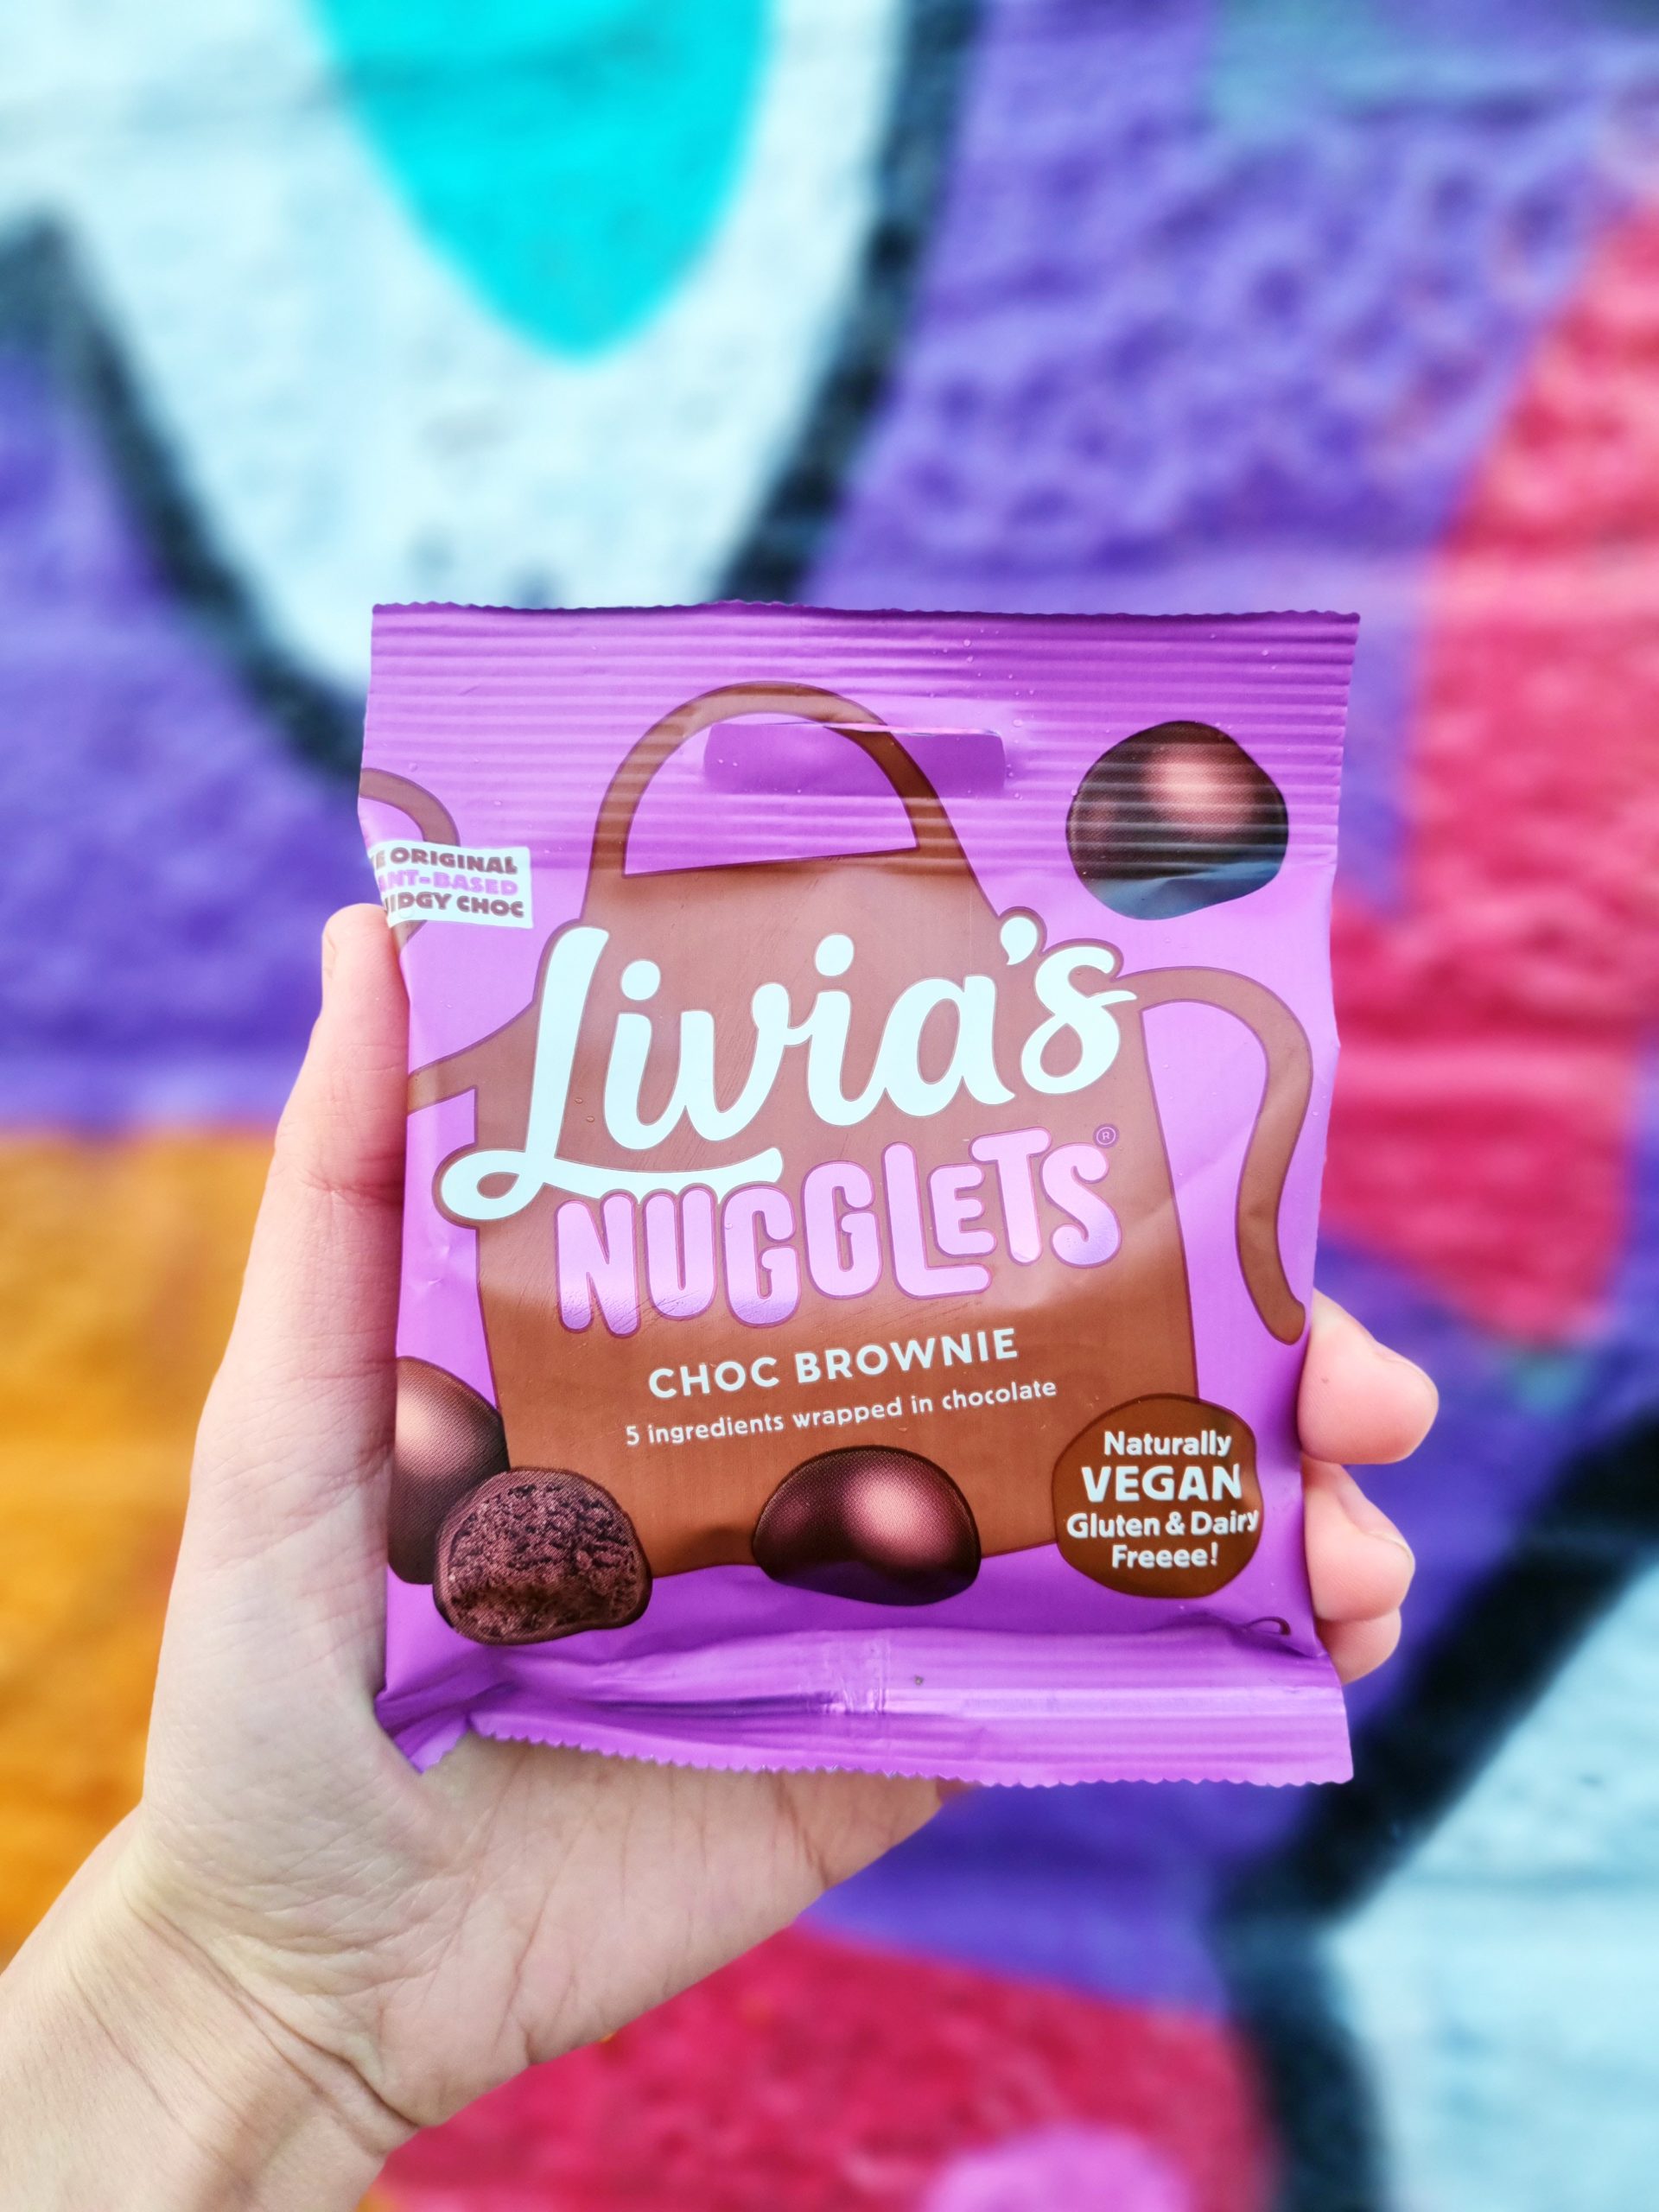 <img src="liviasjpg" alt="livias nugglets chocolate brownie"/> 